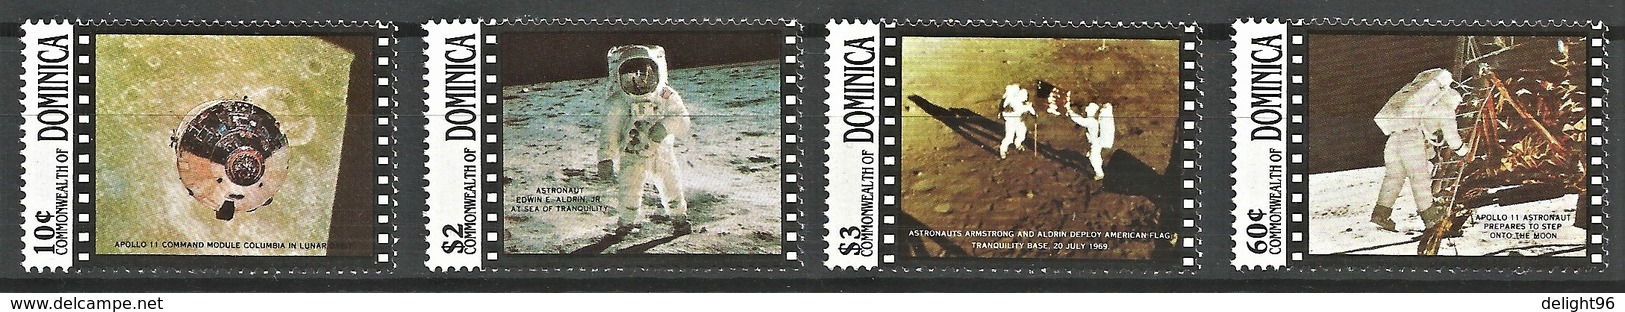 1989 Dominica 20th Anniversary Of Moon Landing Set And Souvenir Sheet (** / MNH / UMM) - América Del Norte